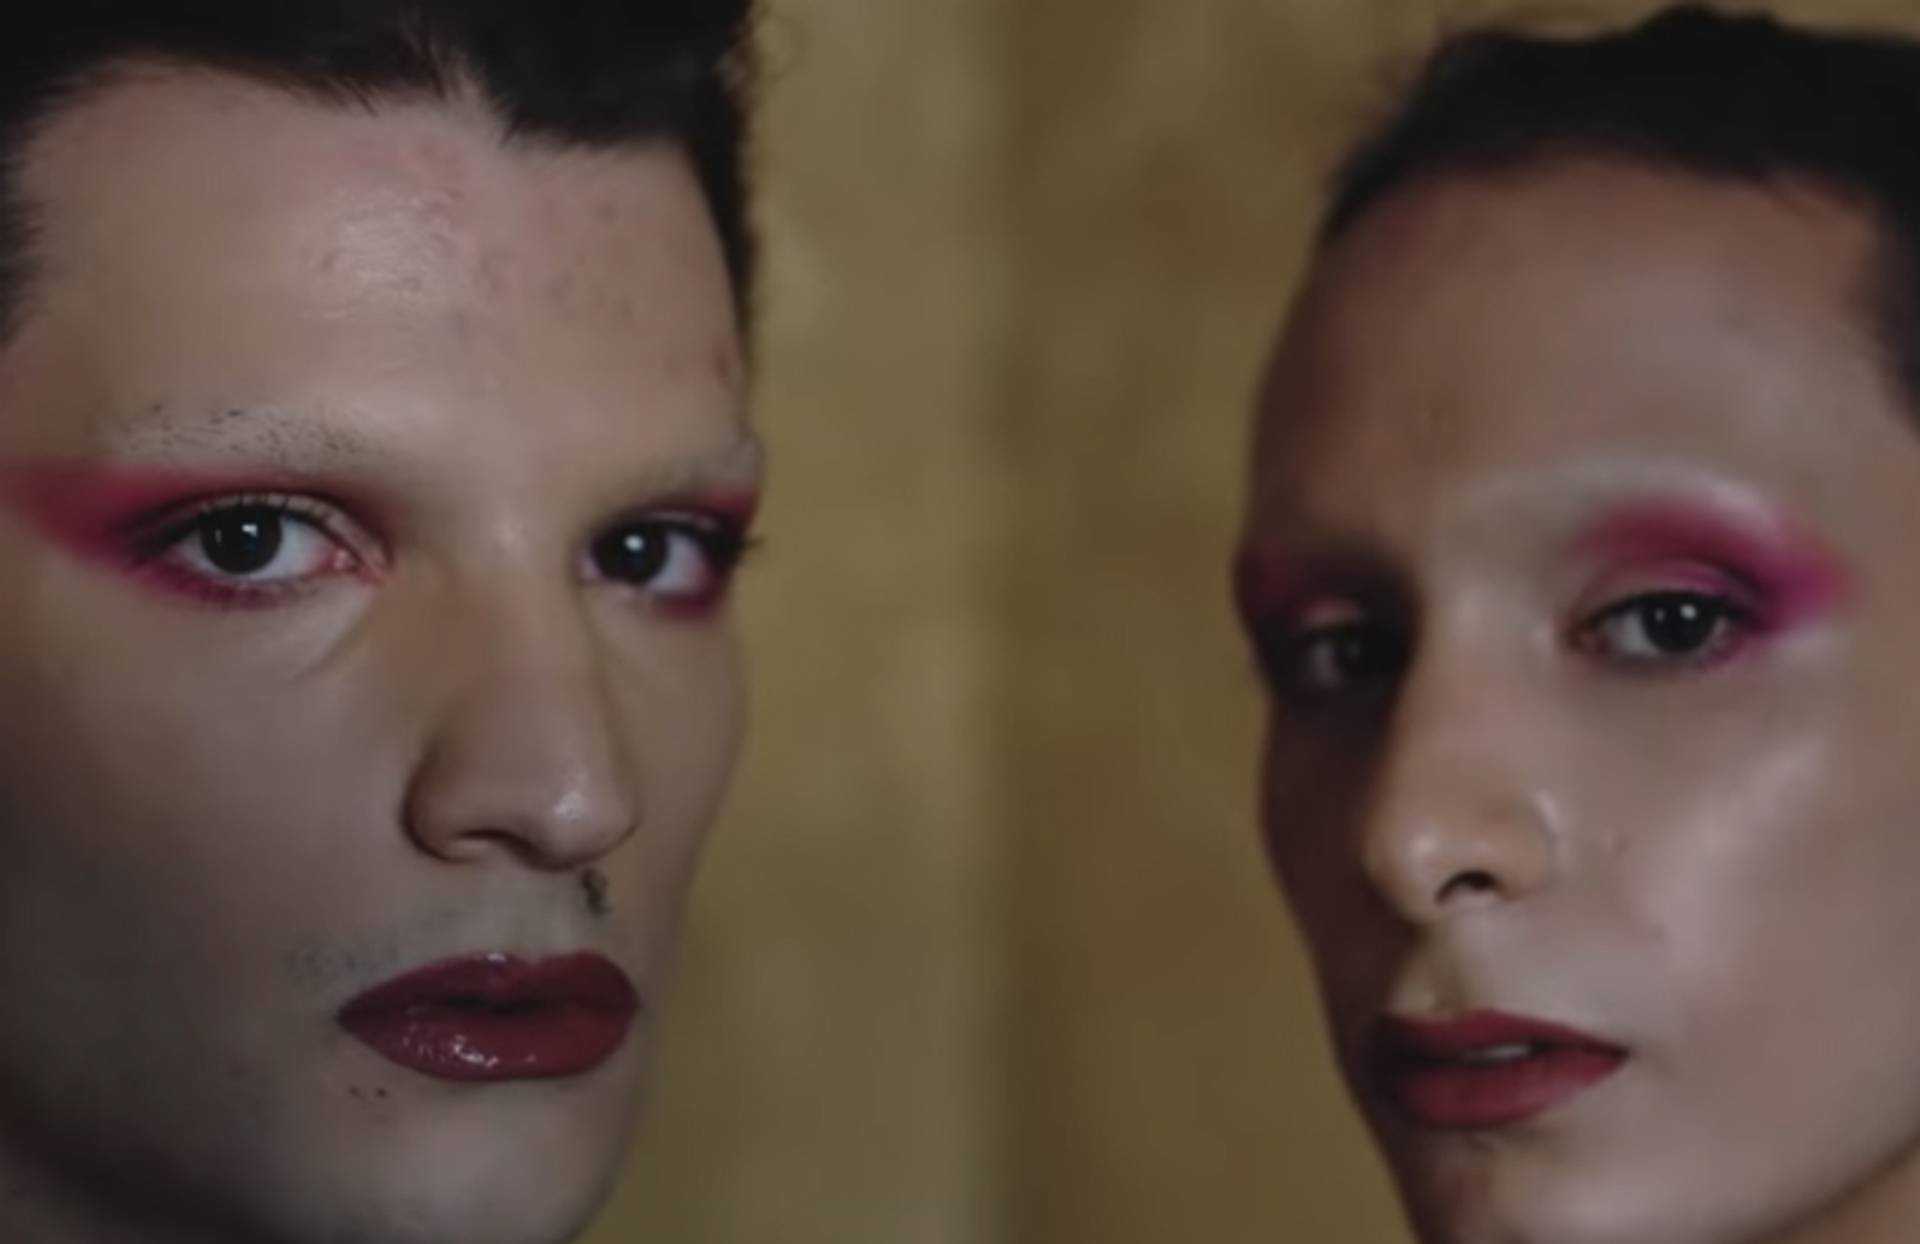 Gucci film celebrates Gen Z’s gender fluidity